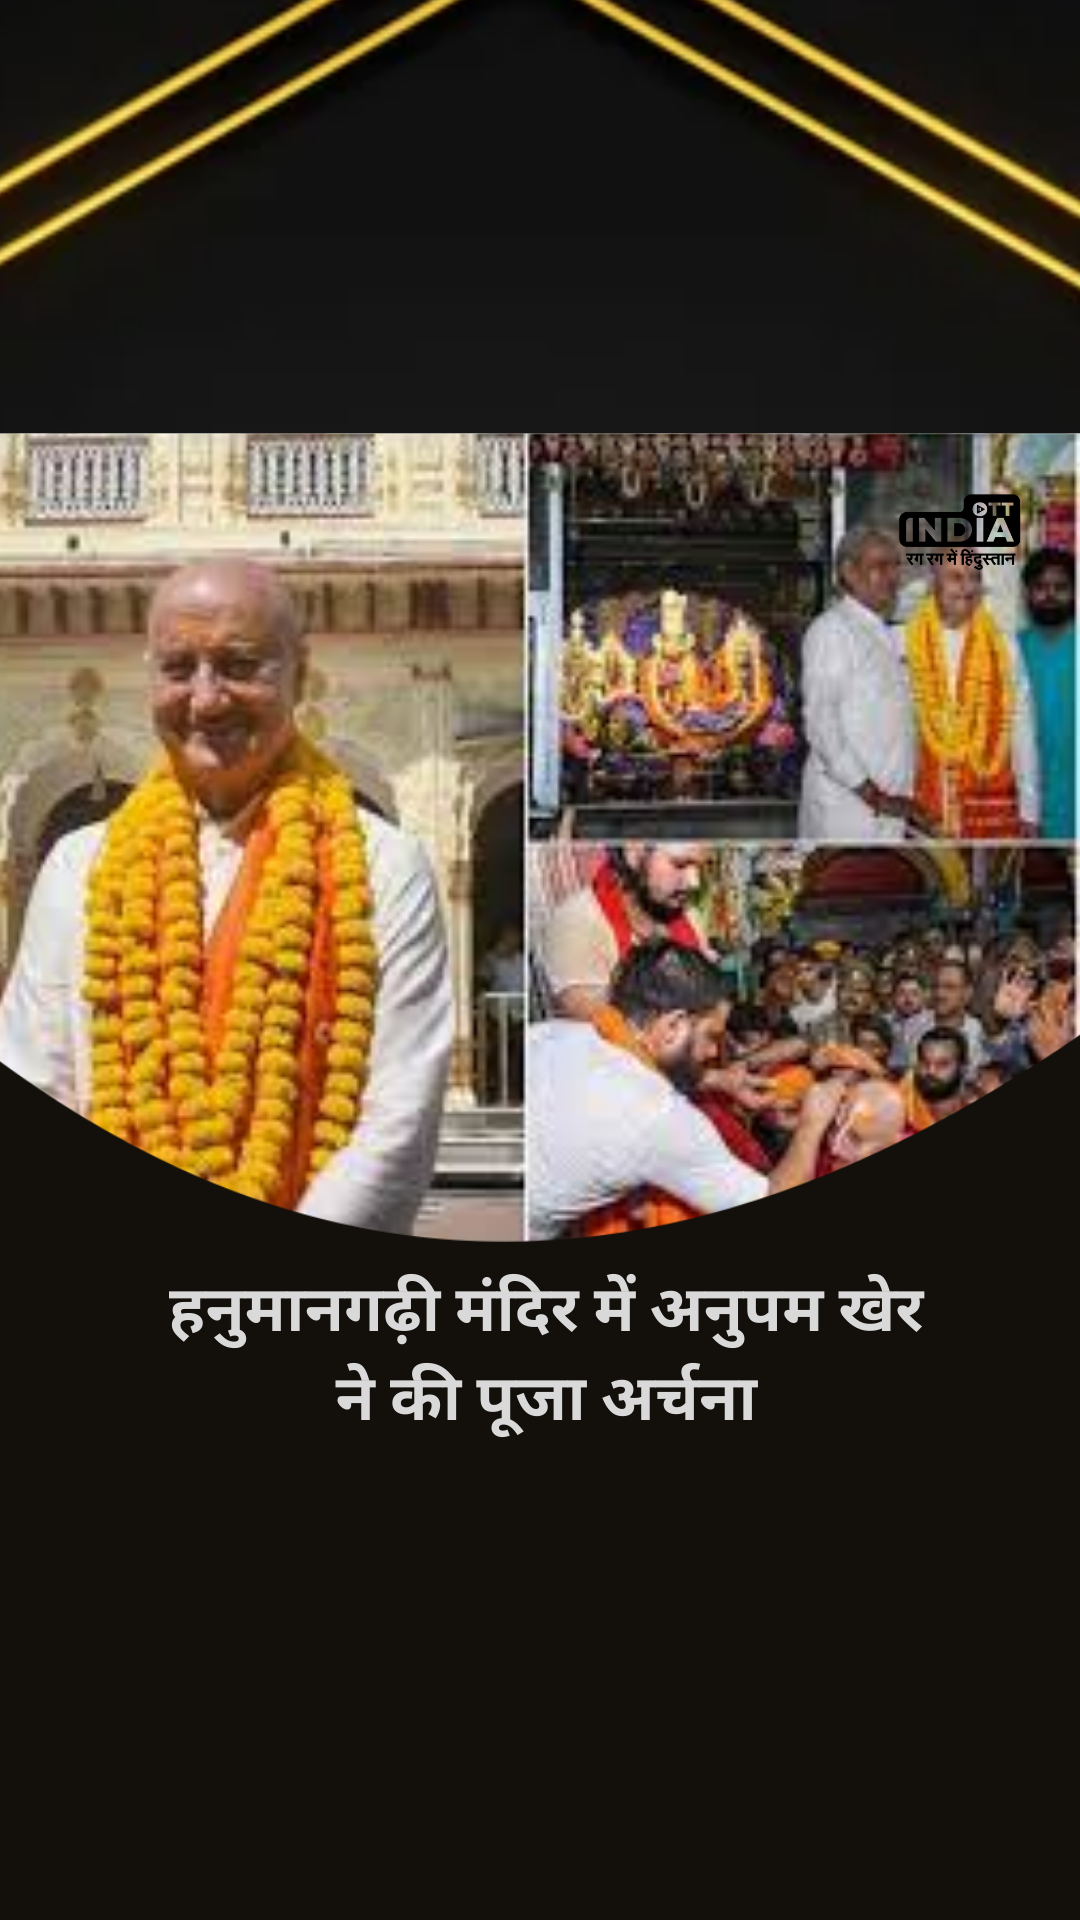 Famous Bollywood actor Anupam Kher reached Ayodhya, worshiped God in Hanumangarhi temple